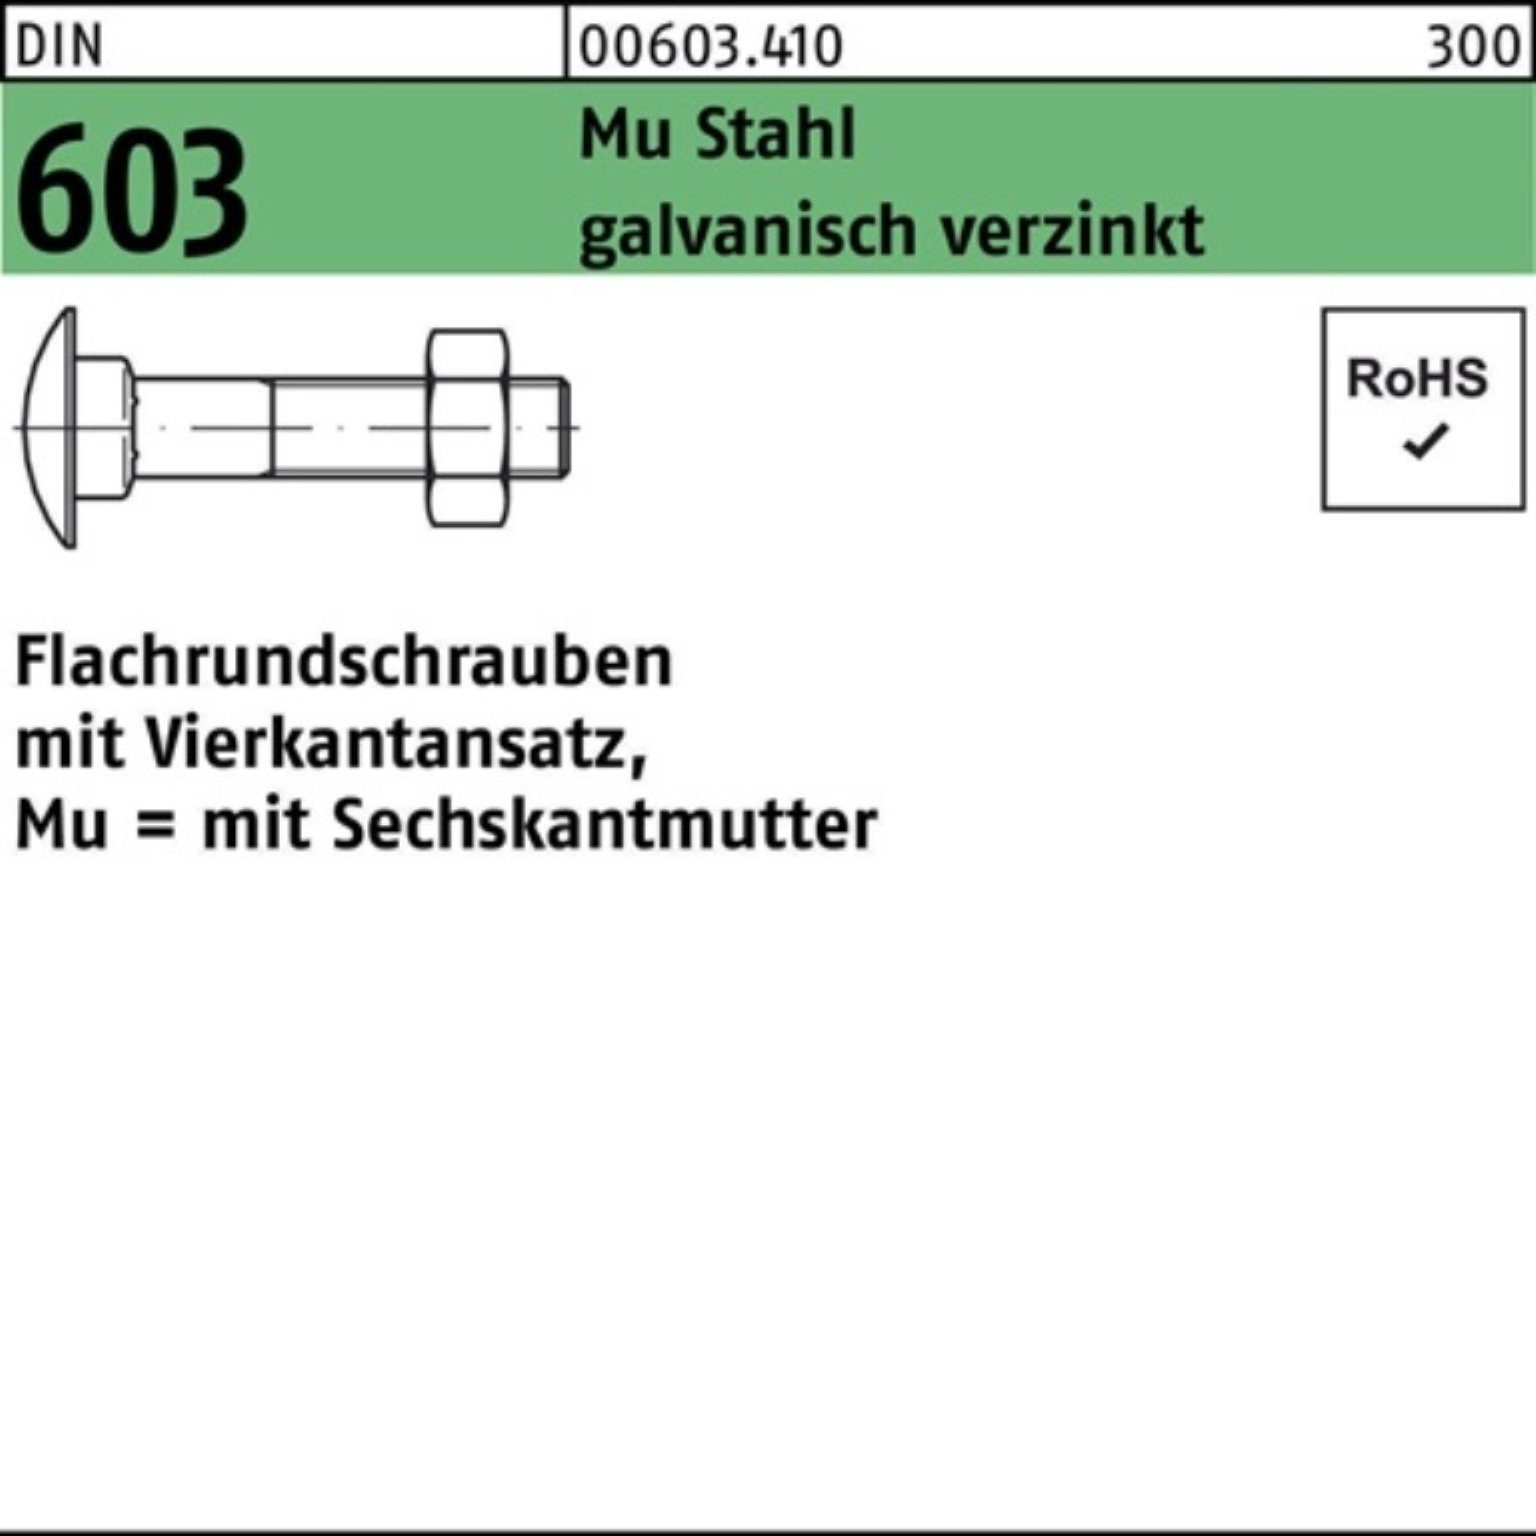 Pack Reyher Vierkantansatz/6-ktmutter 100er M12x260 Schraube DIN 603 Flachrundschraube